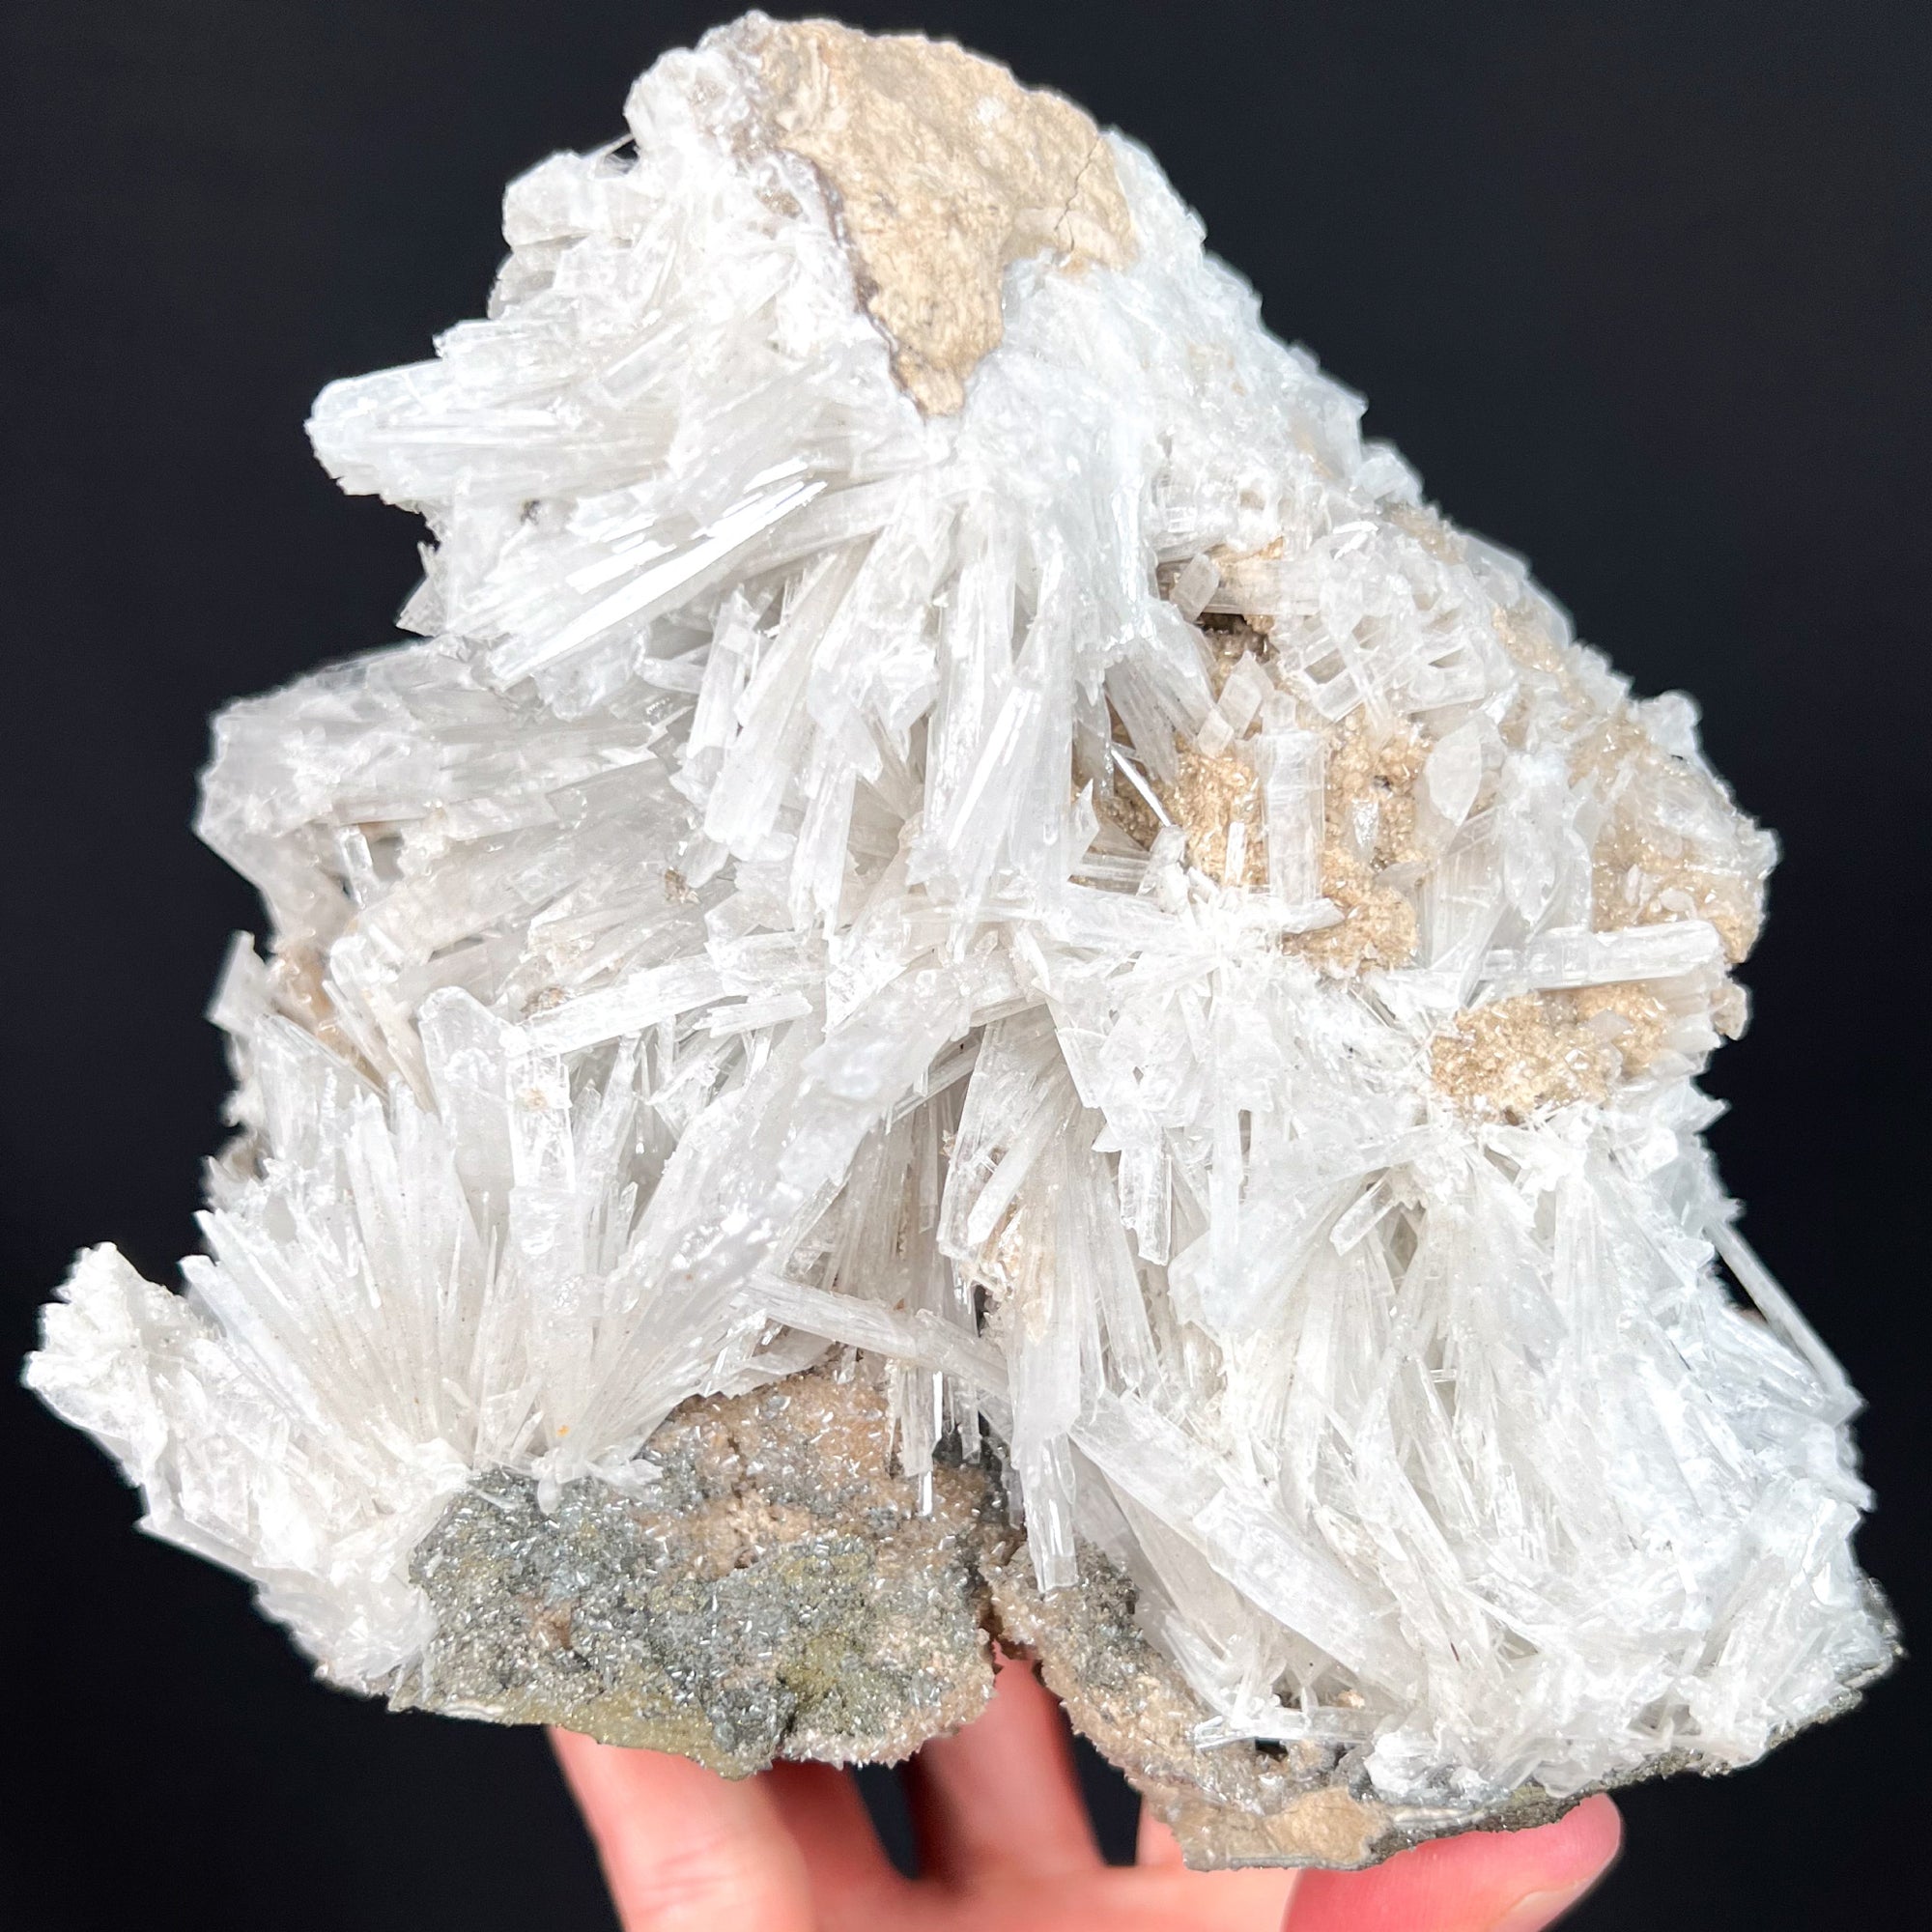 Large Celestite Geode from Ohio